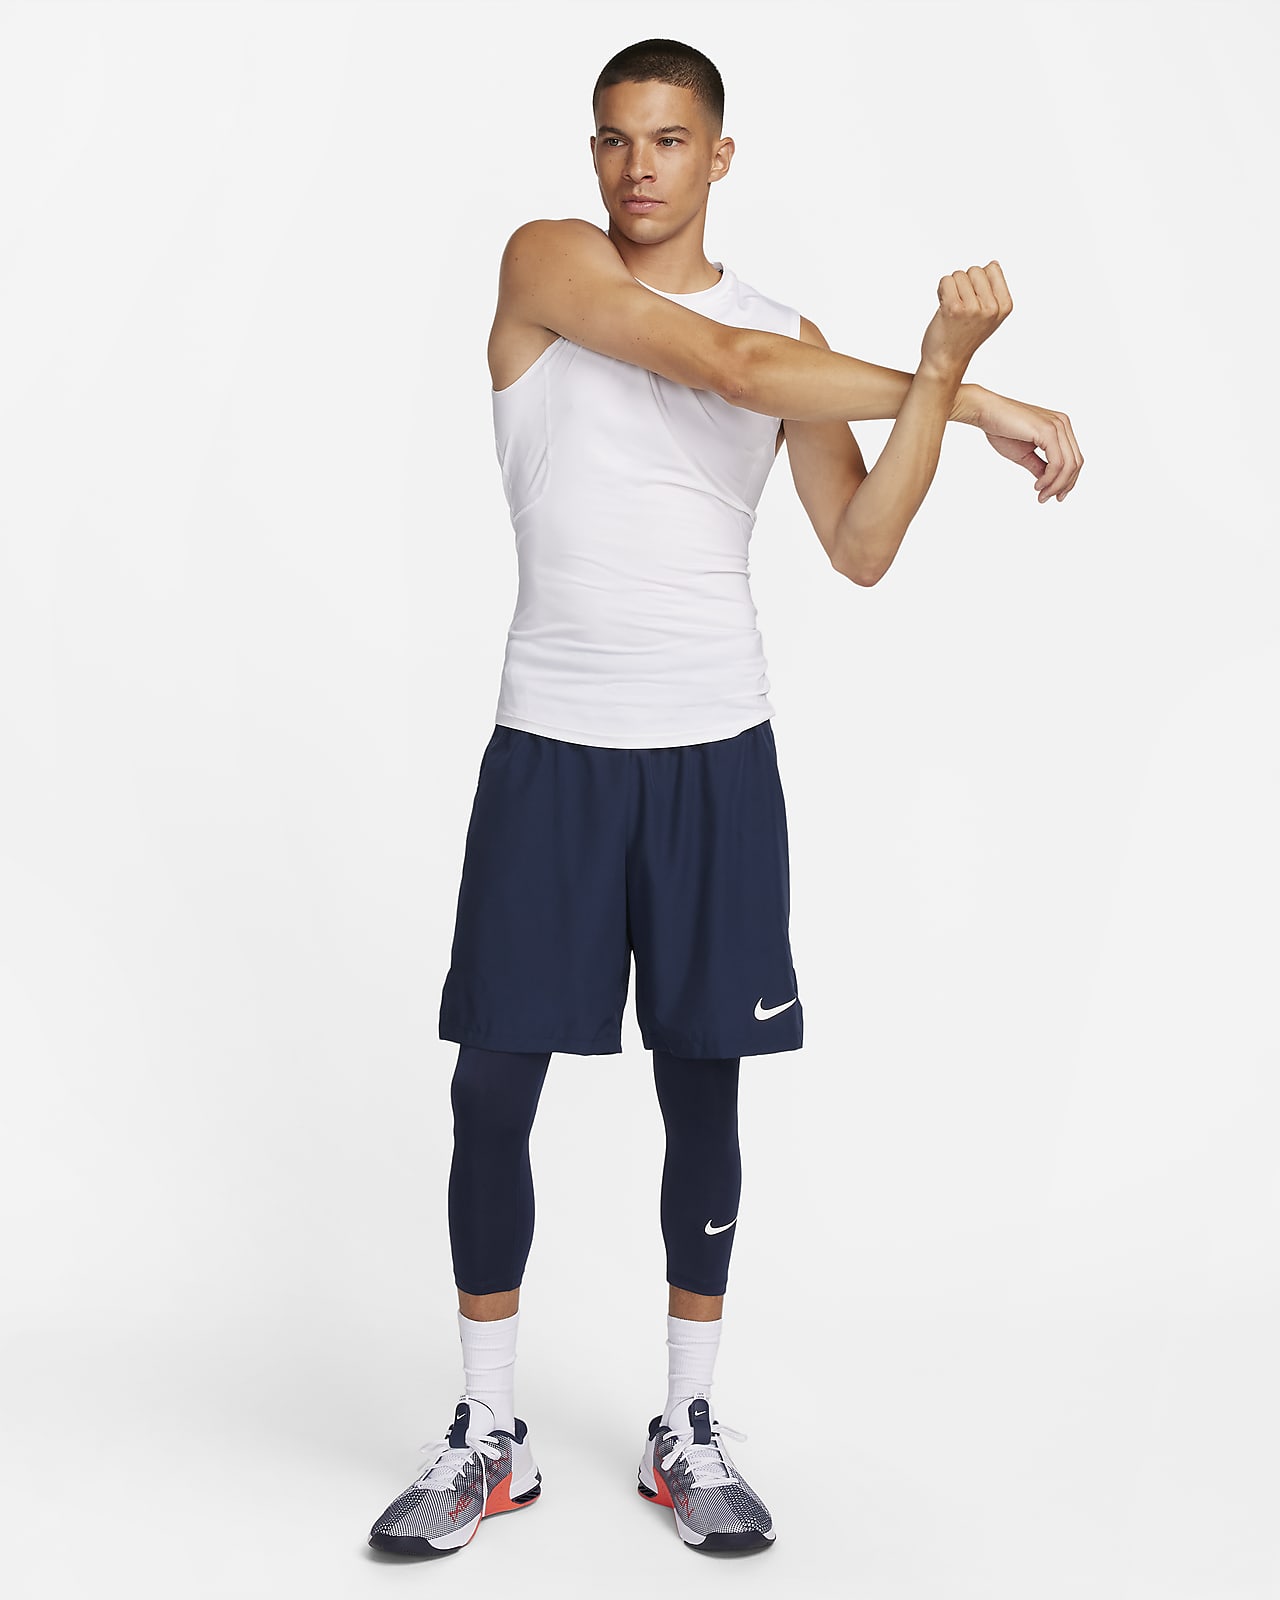 Nike Pro Men's 3/4 Length Training Tights 838055-091 Carbon Heather DRI-FIT  M